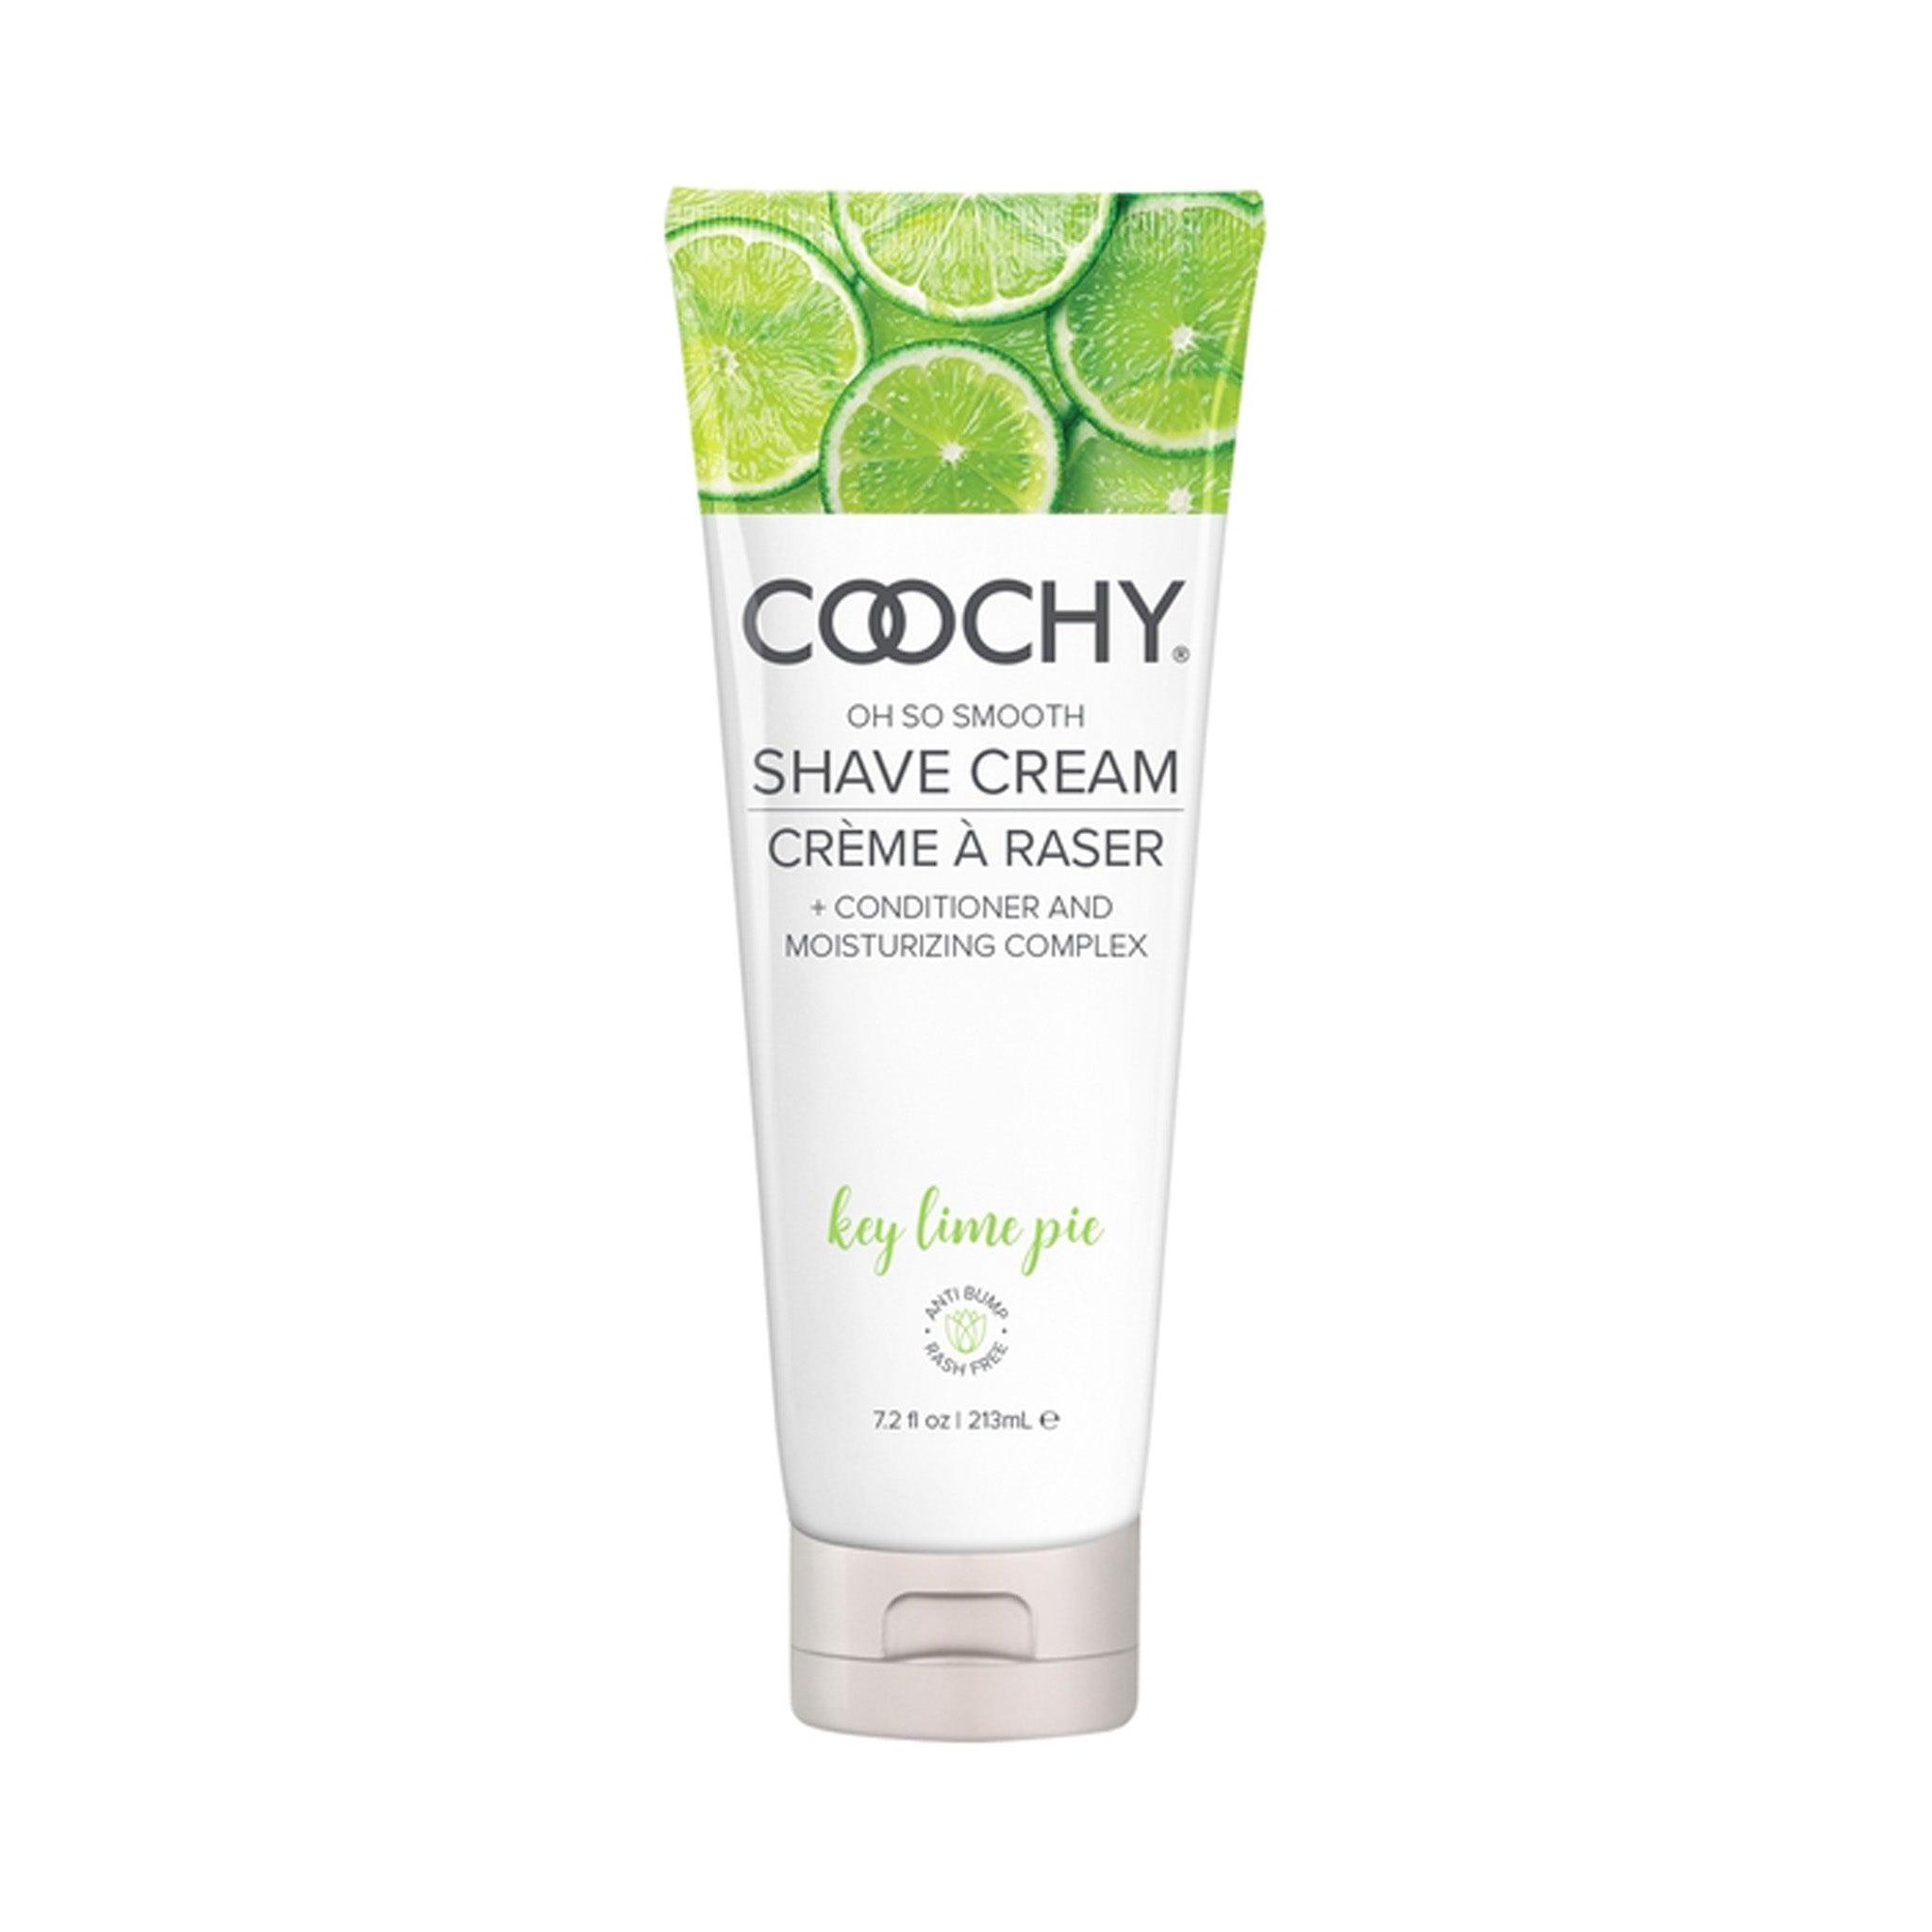 Coochy Shave Cream Key Lime Pie - CheapLubes.com